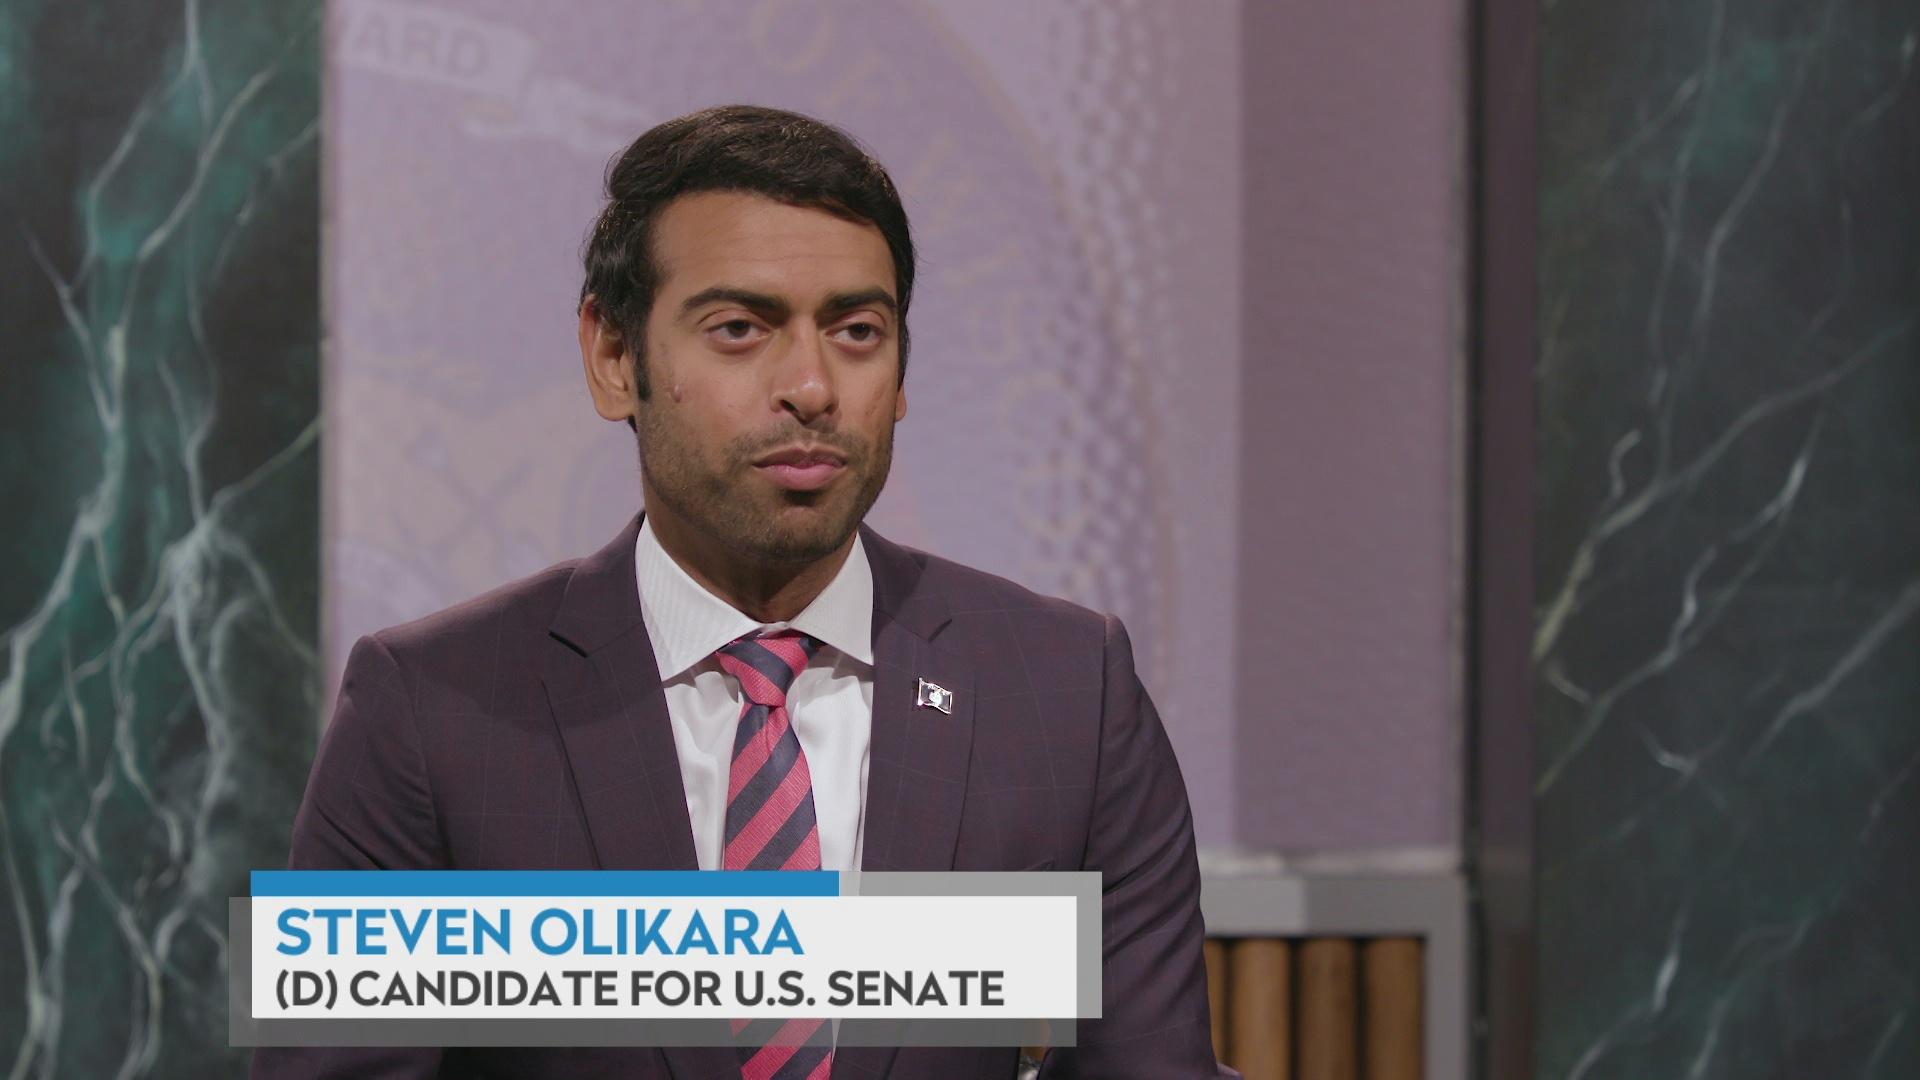 Meet Wisconsin 2022 U.S. Senate candidate Steven Olikara